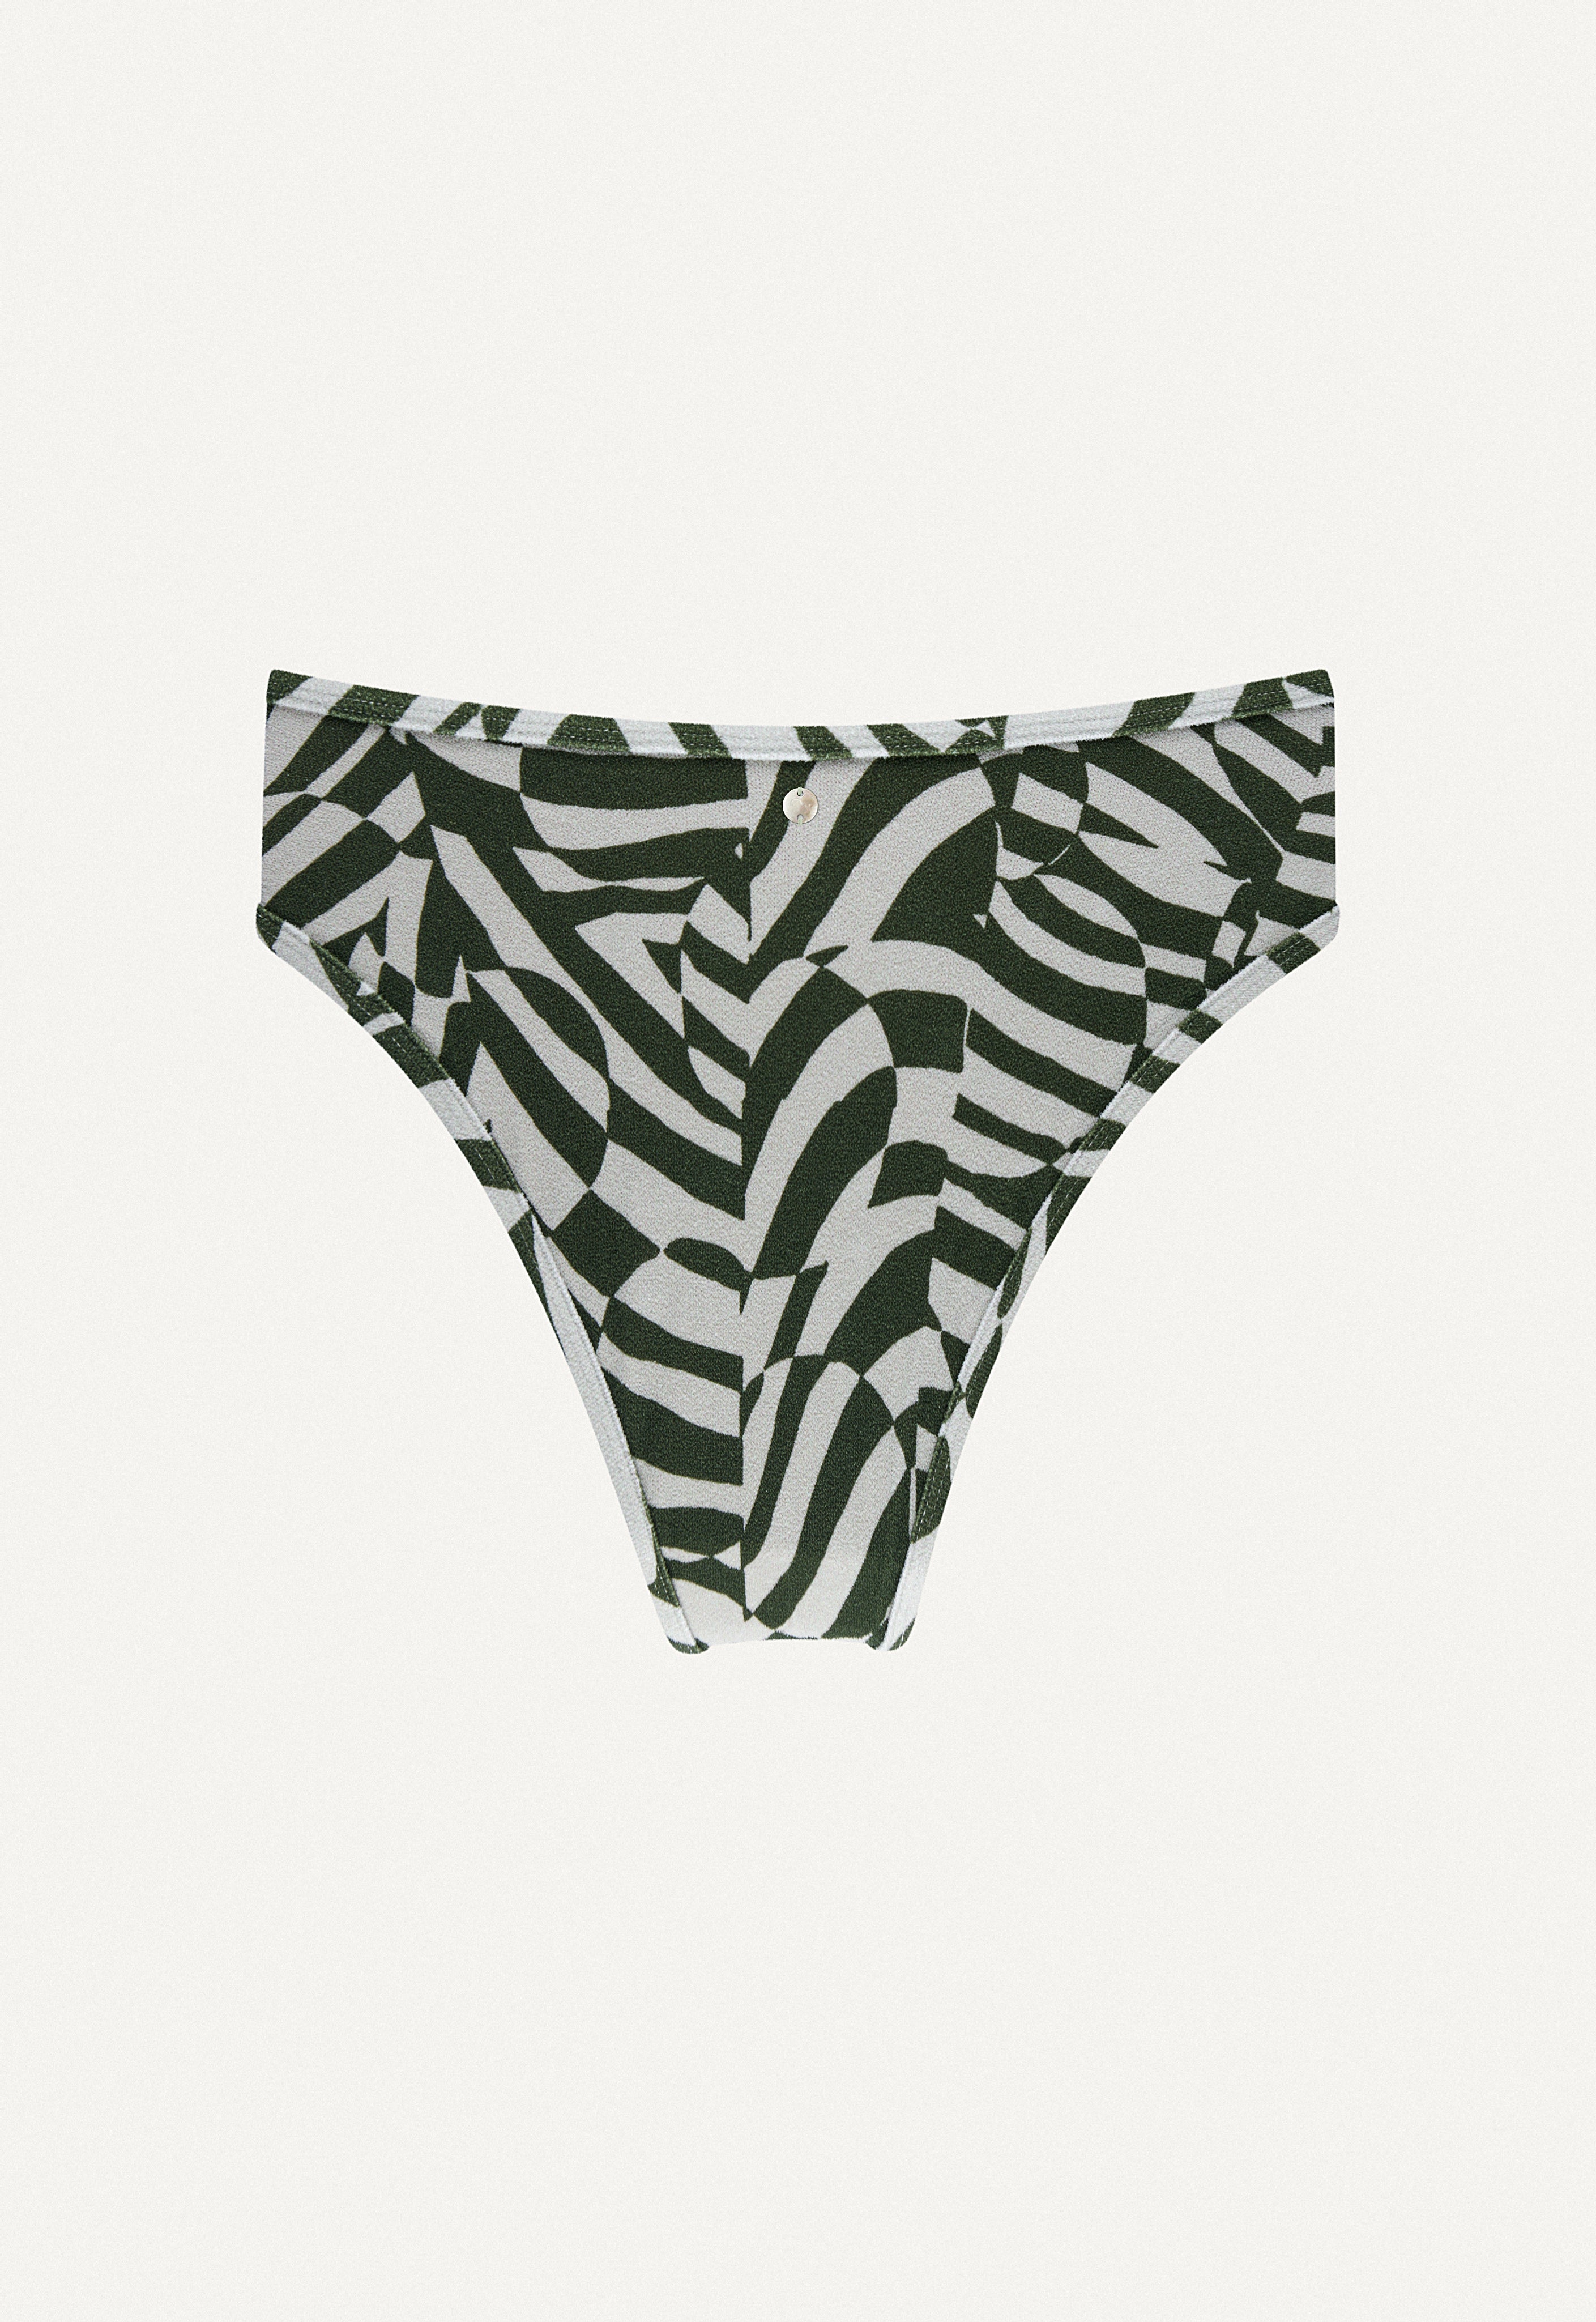 Bikini Bottom "Calima" in unreal zebra print